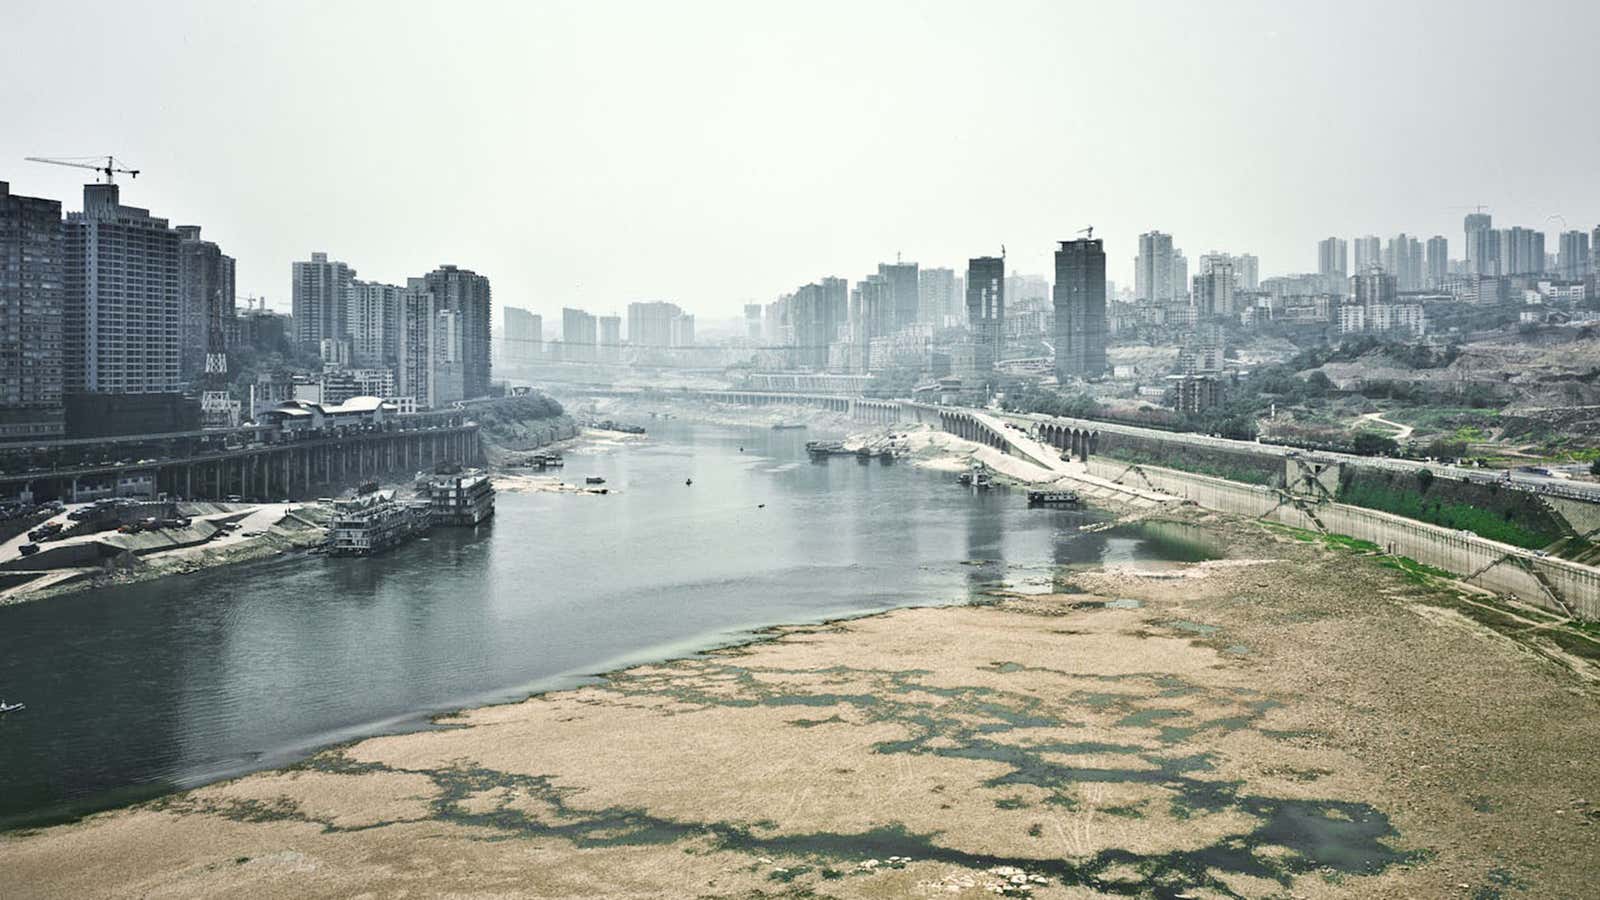 Photos: Inside China’s unknown mega-city